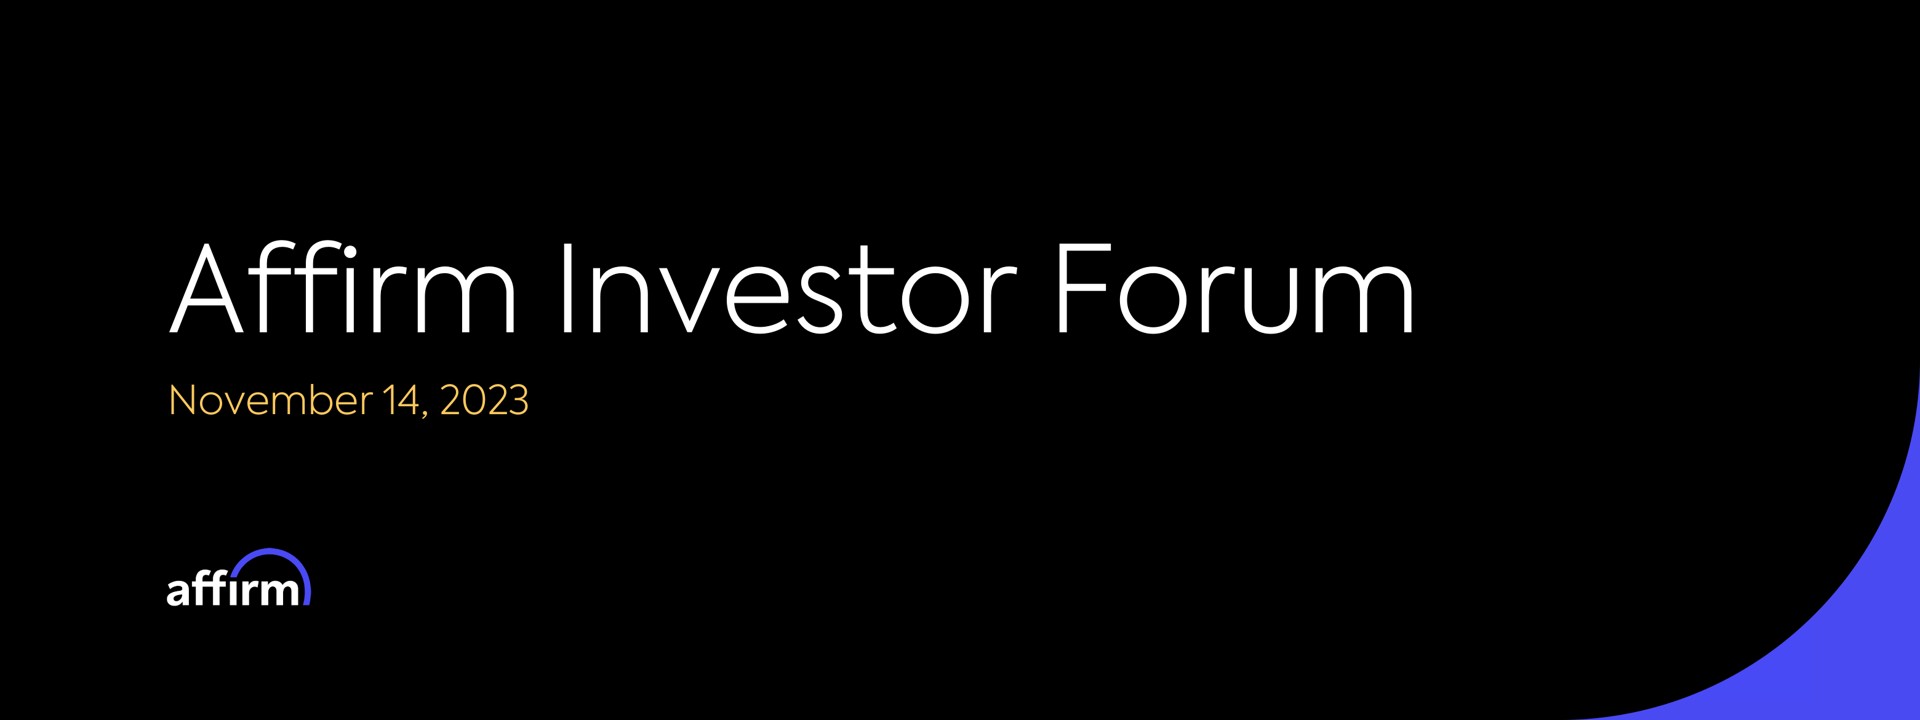 affirm investor forum | Affirm